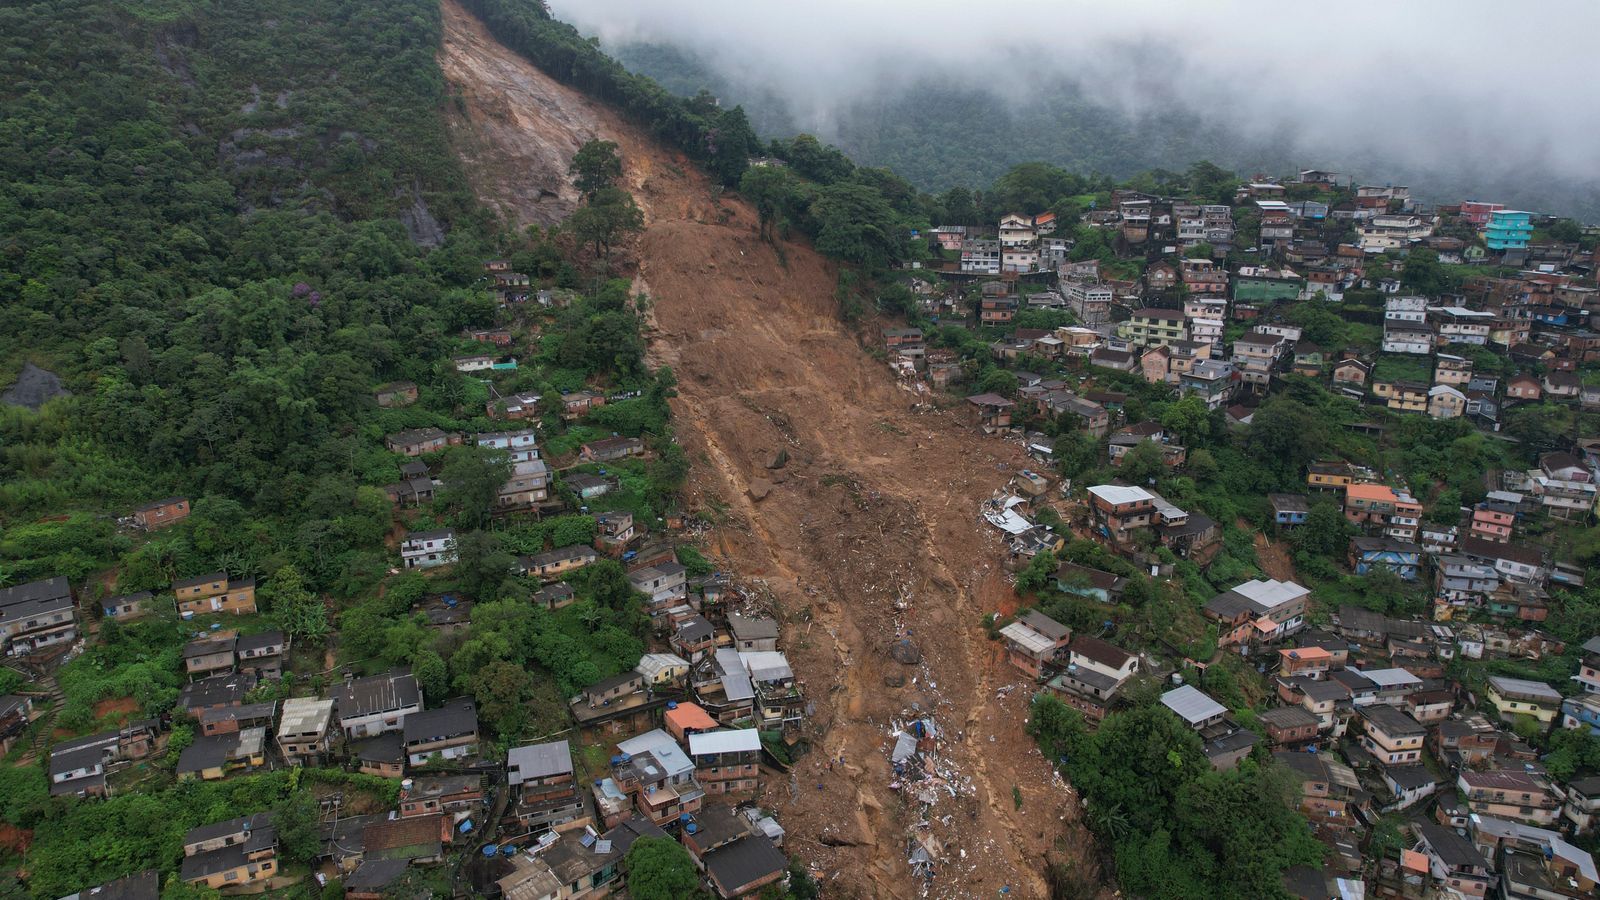 The upper portion of the landslide at Morro da Oficina in Petropolis.